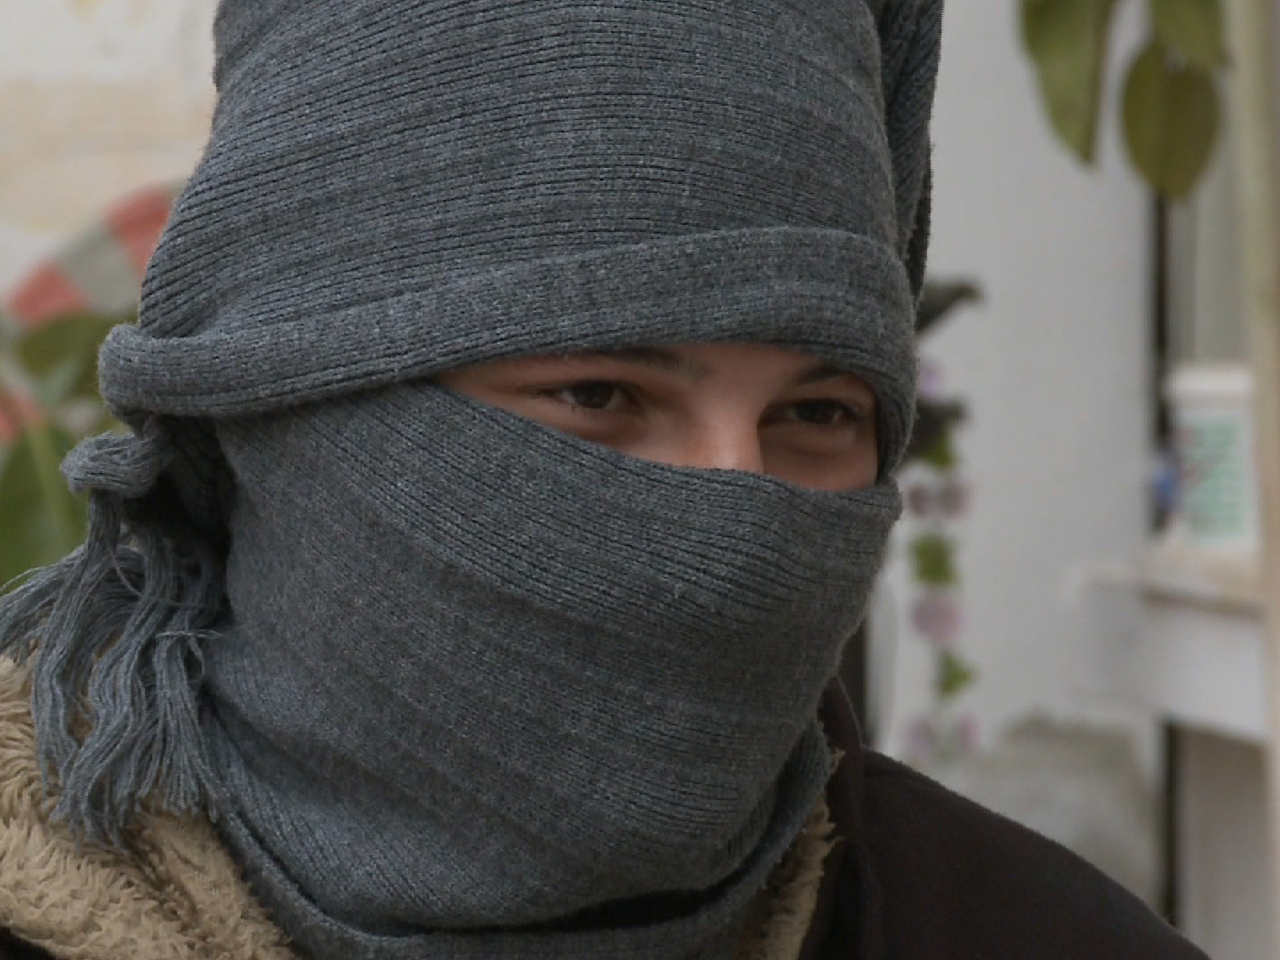 The Syrian teen who helped spark an uprising - CBS News